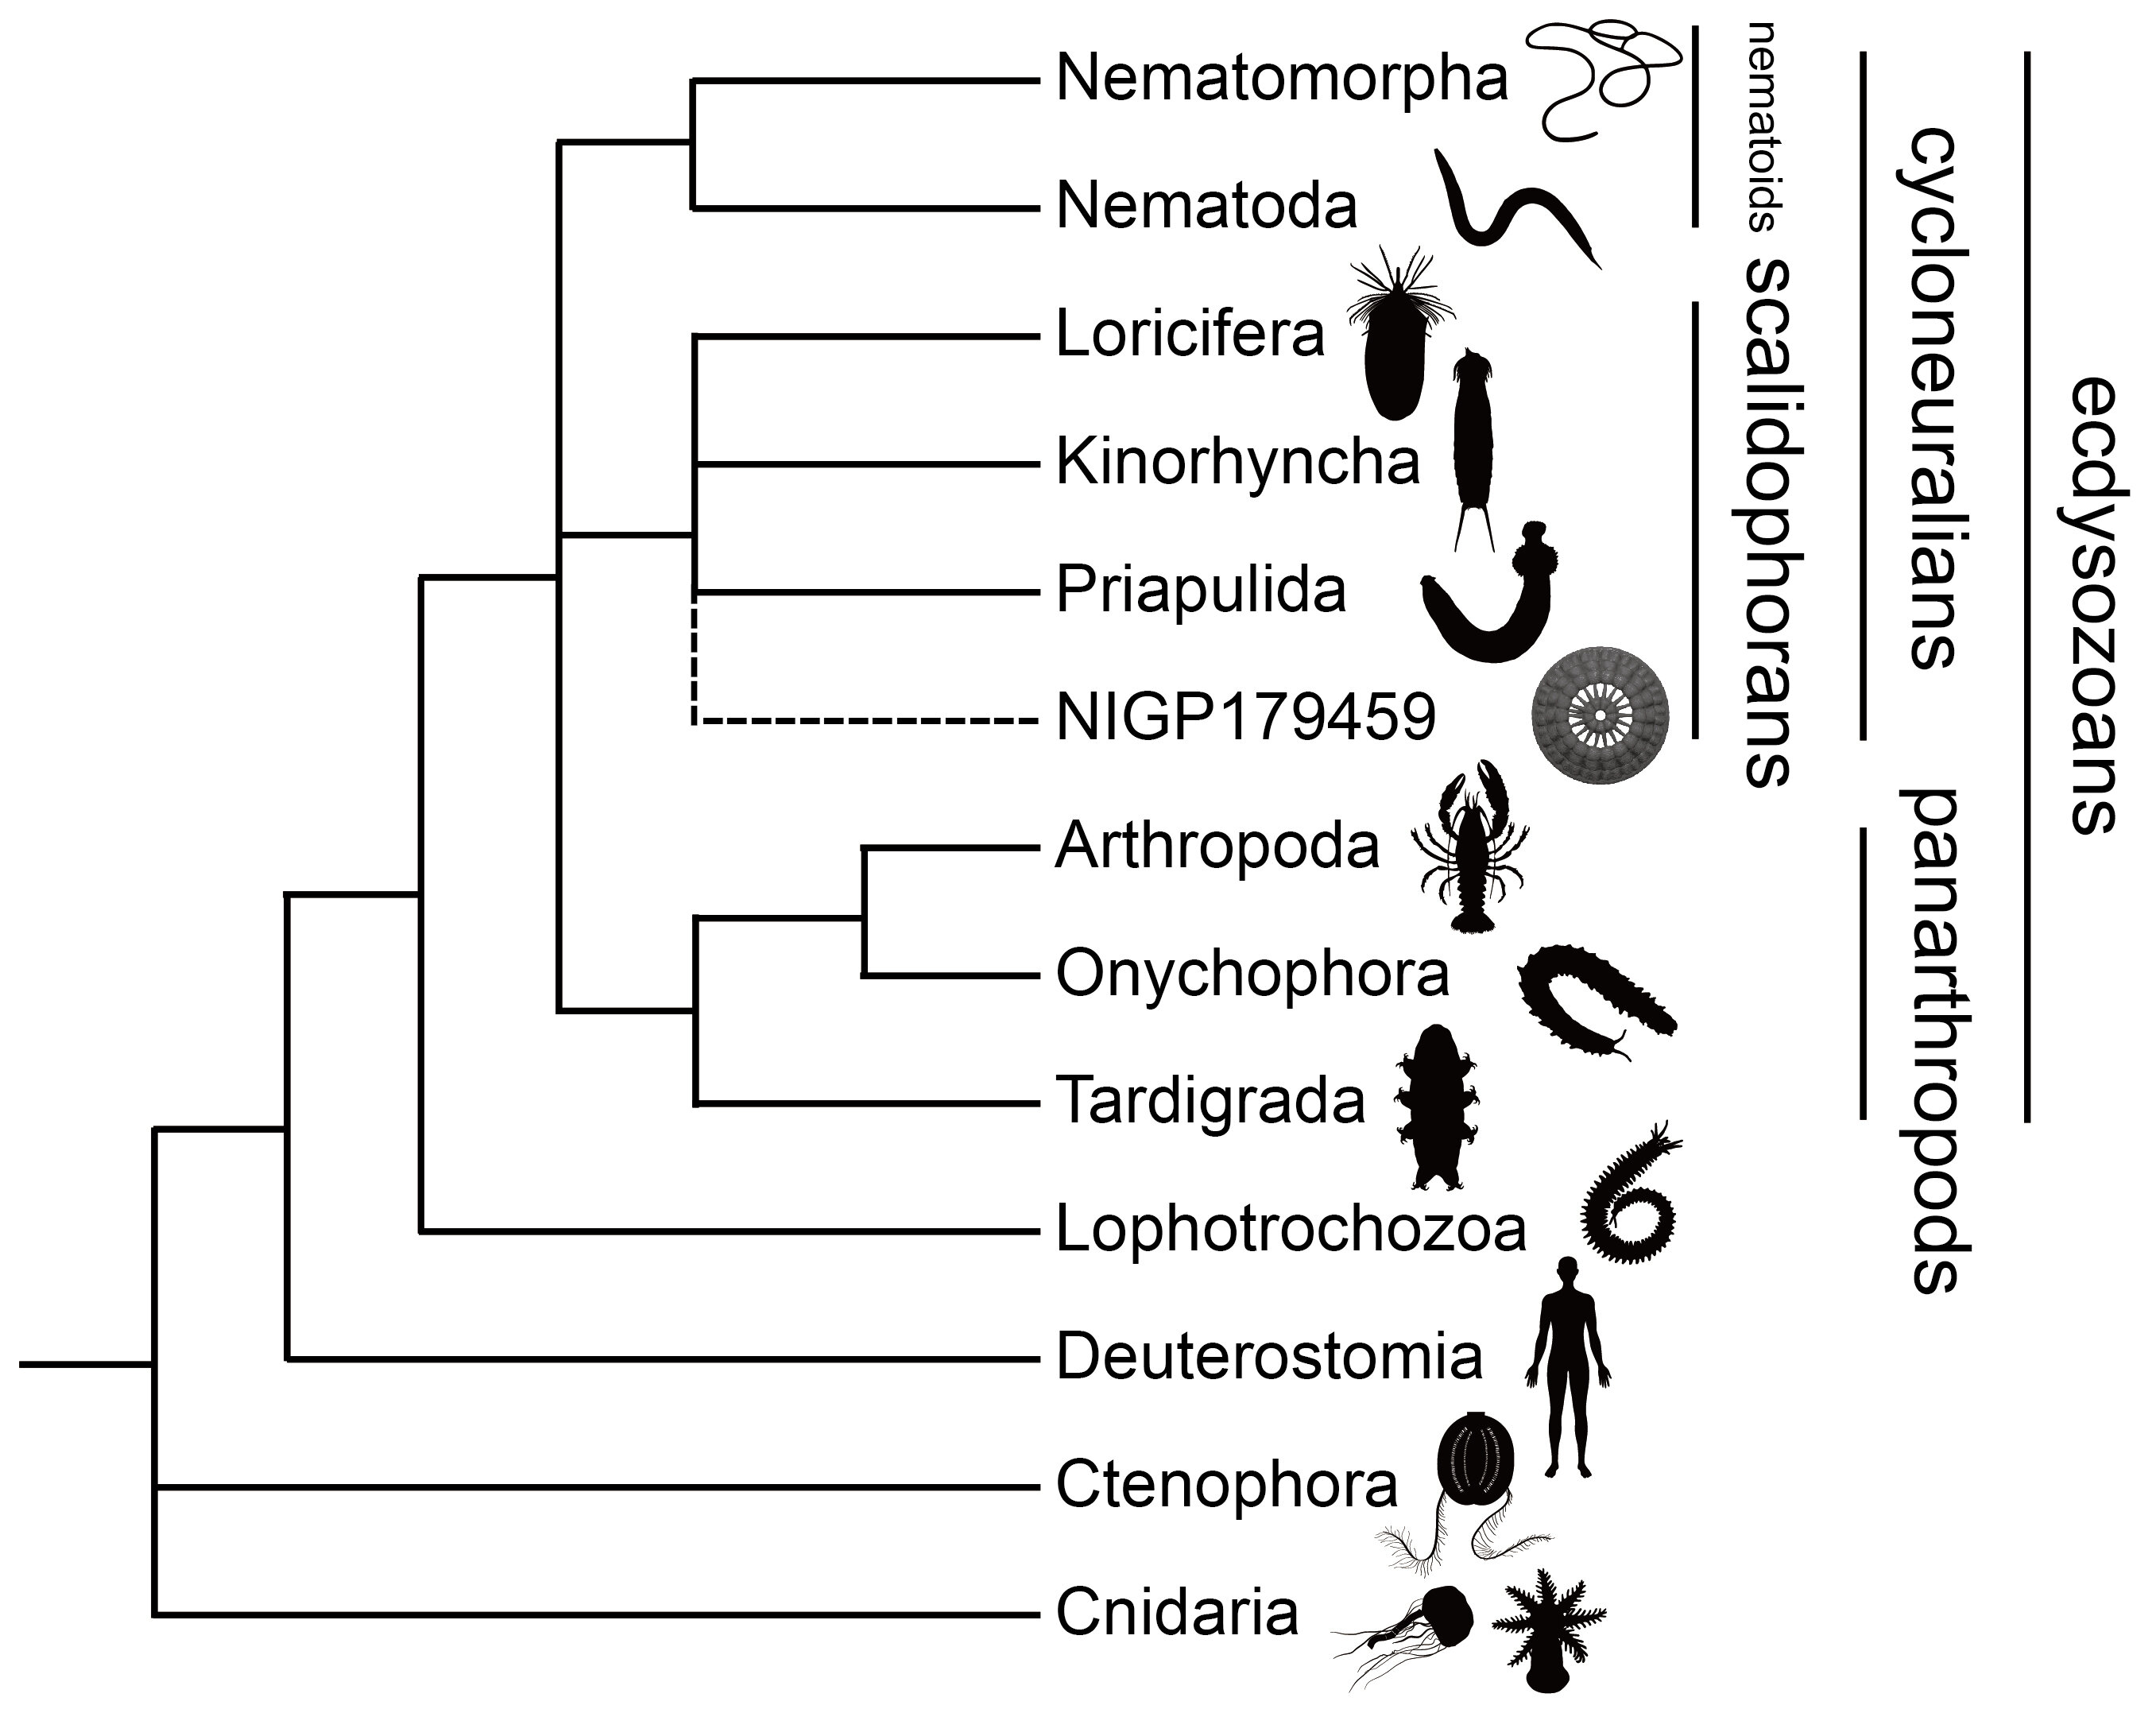 Caelidracones, Breviquartossa and Lophocratia are all node-based clades